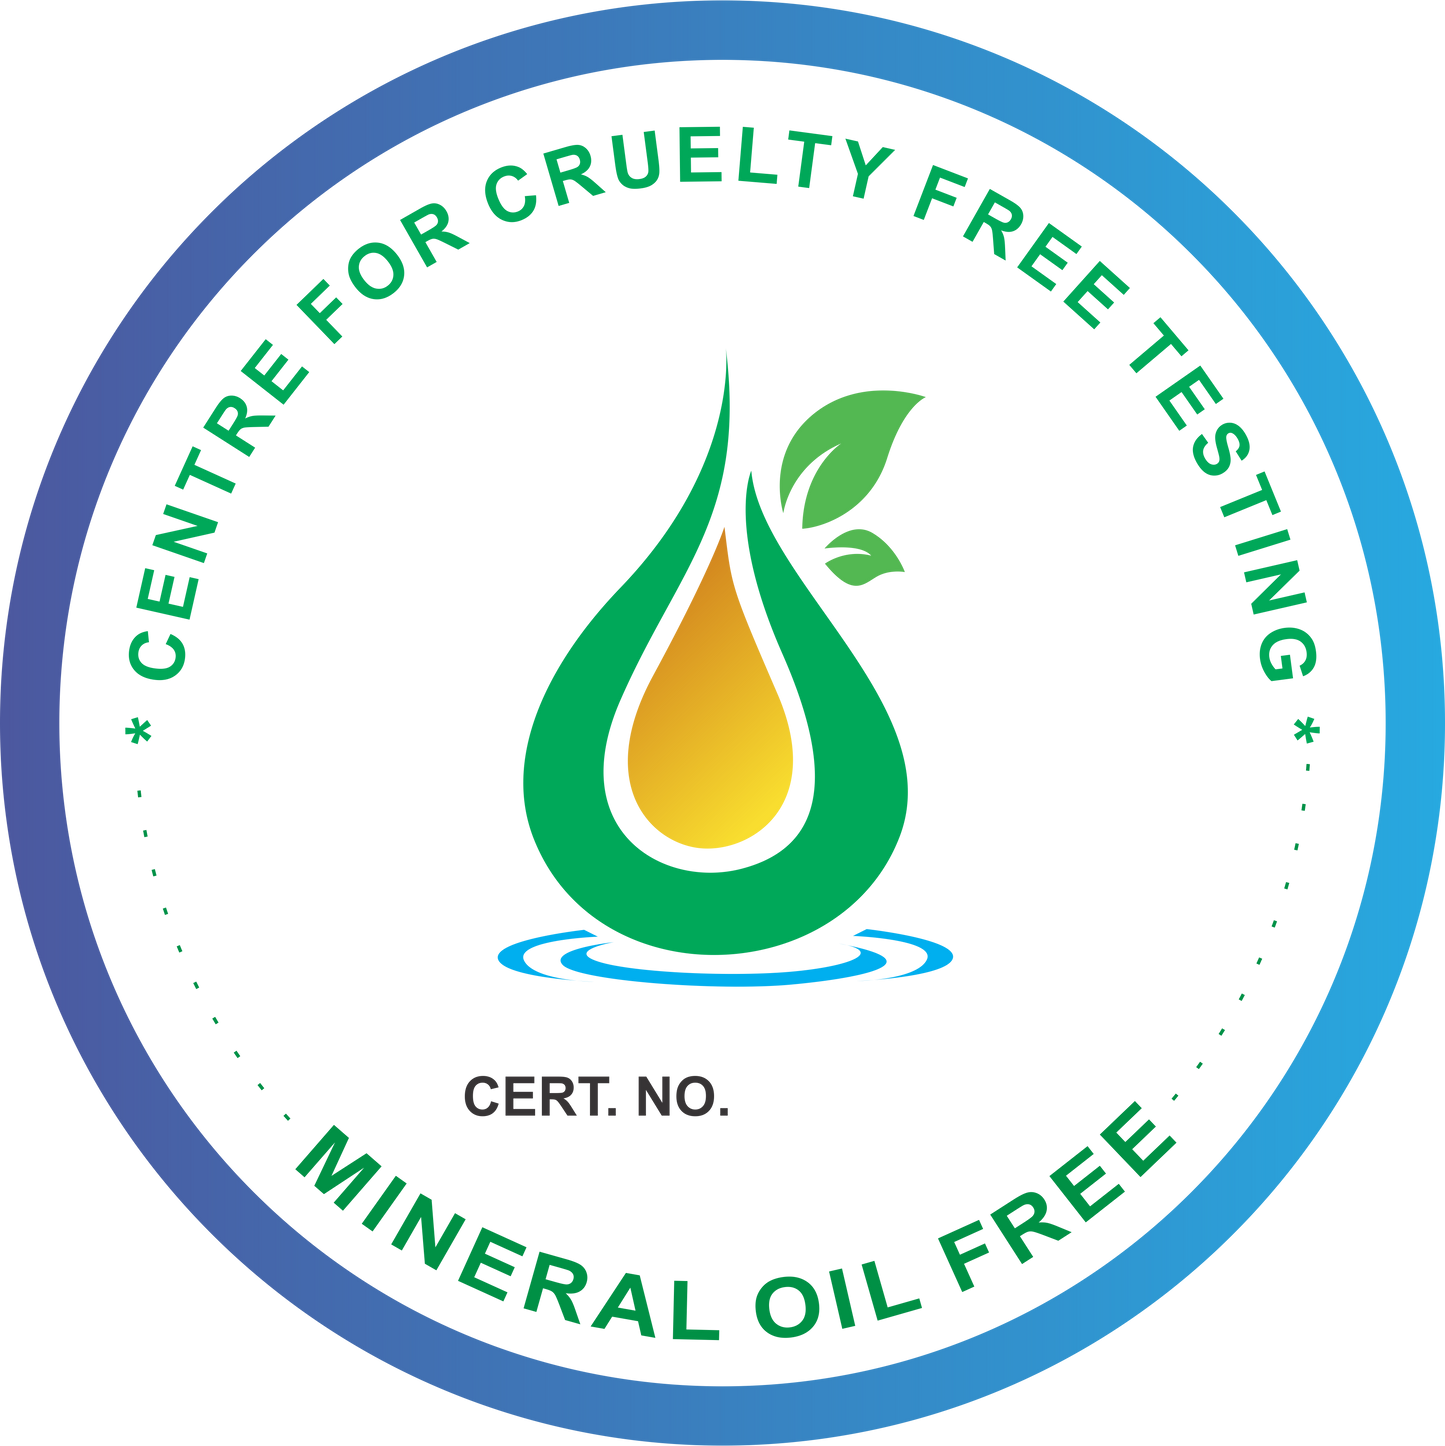 Mineral Oil Free